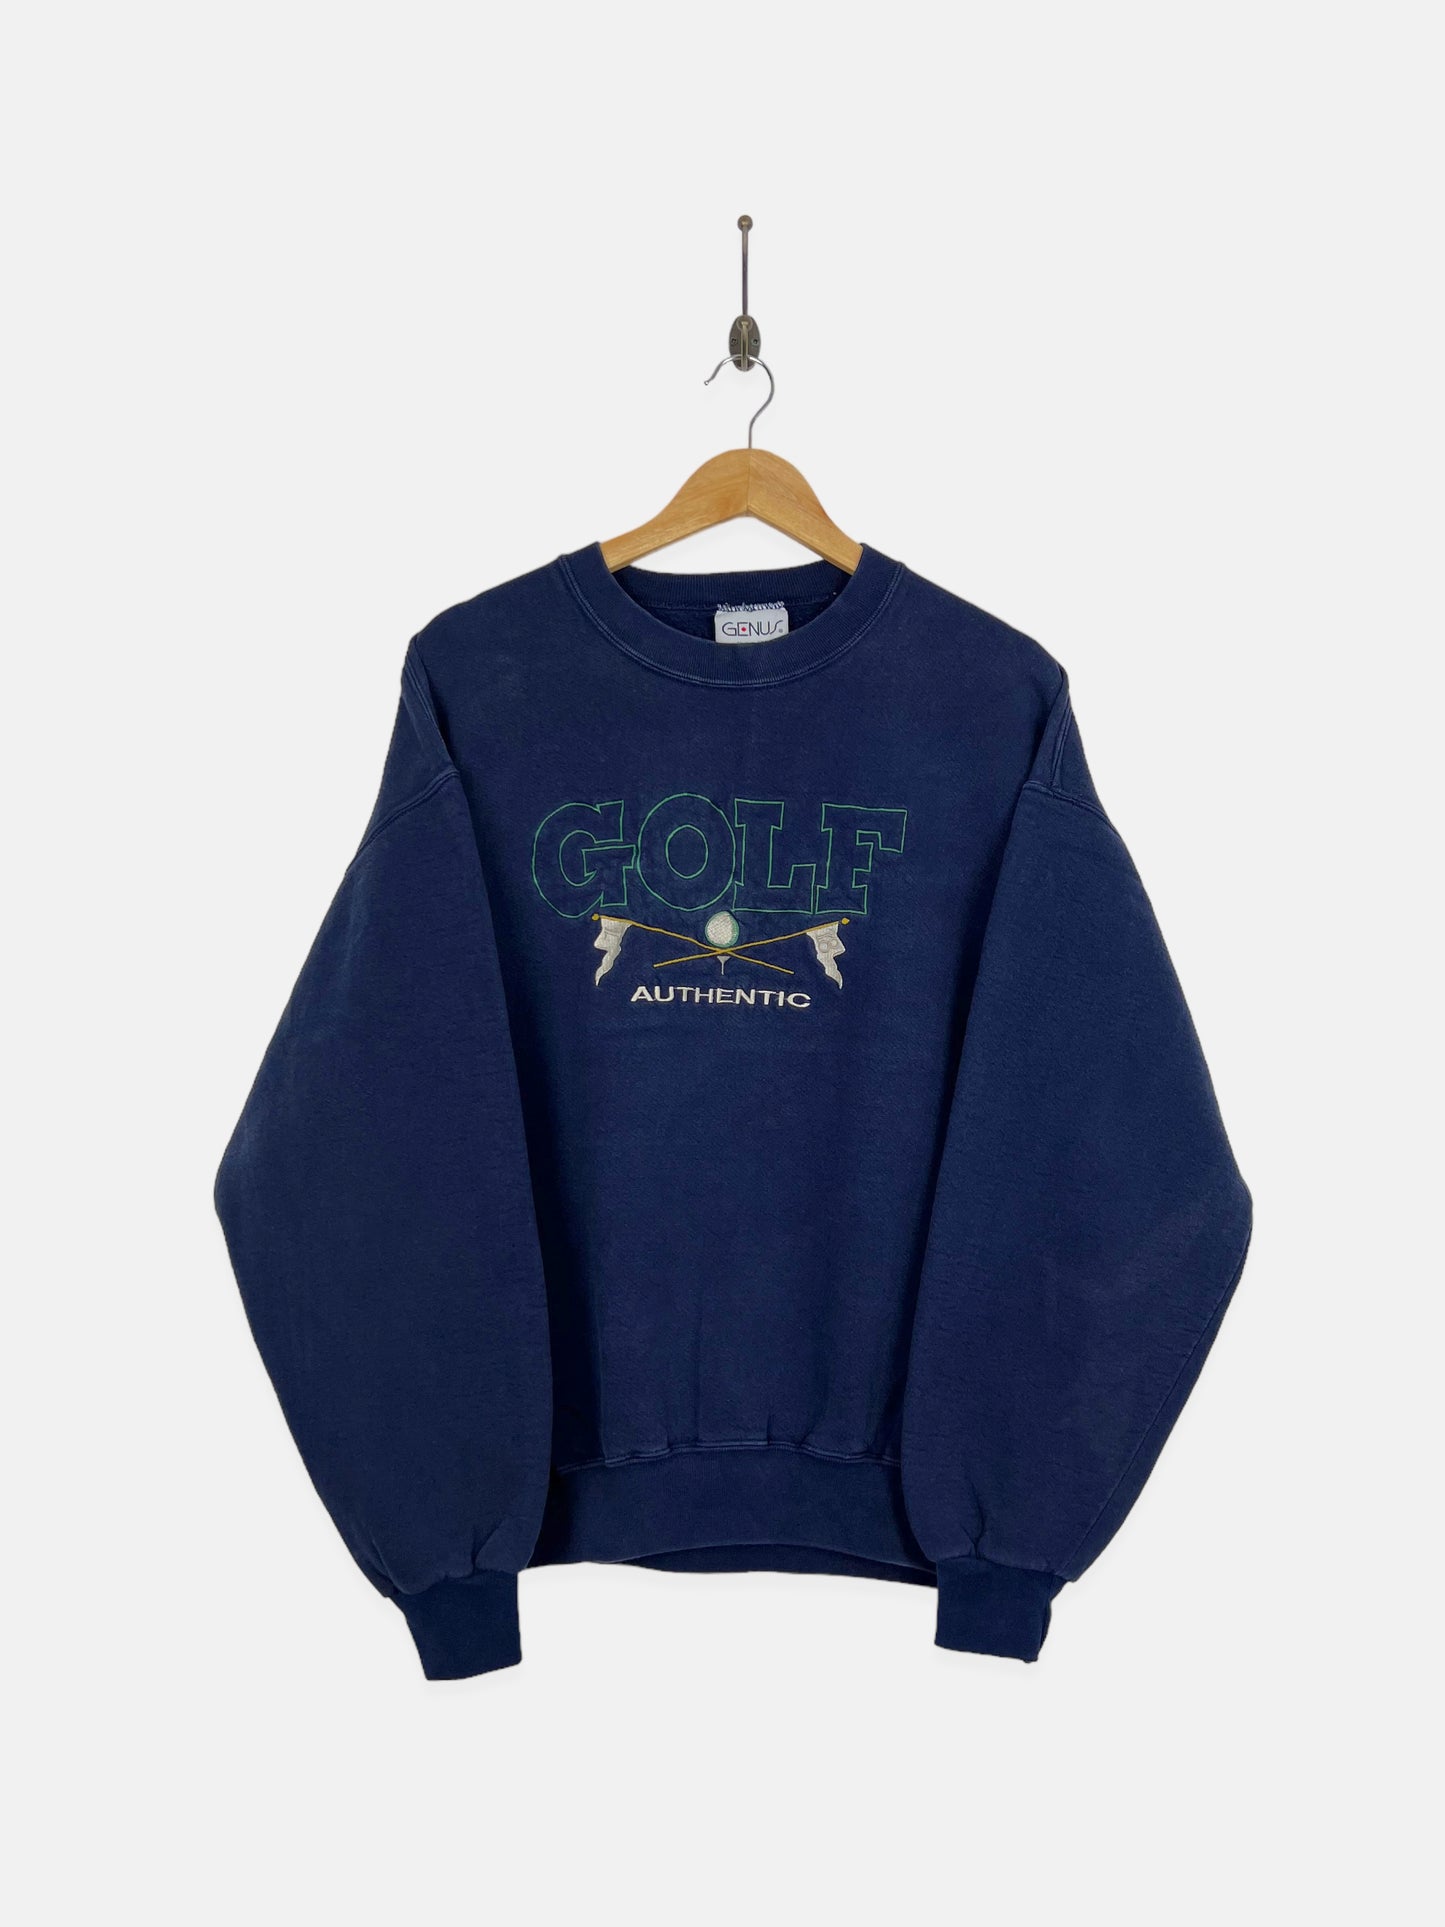 90's Golf USA Made Embroidered Vintage Sweatshirt Size 14